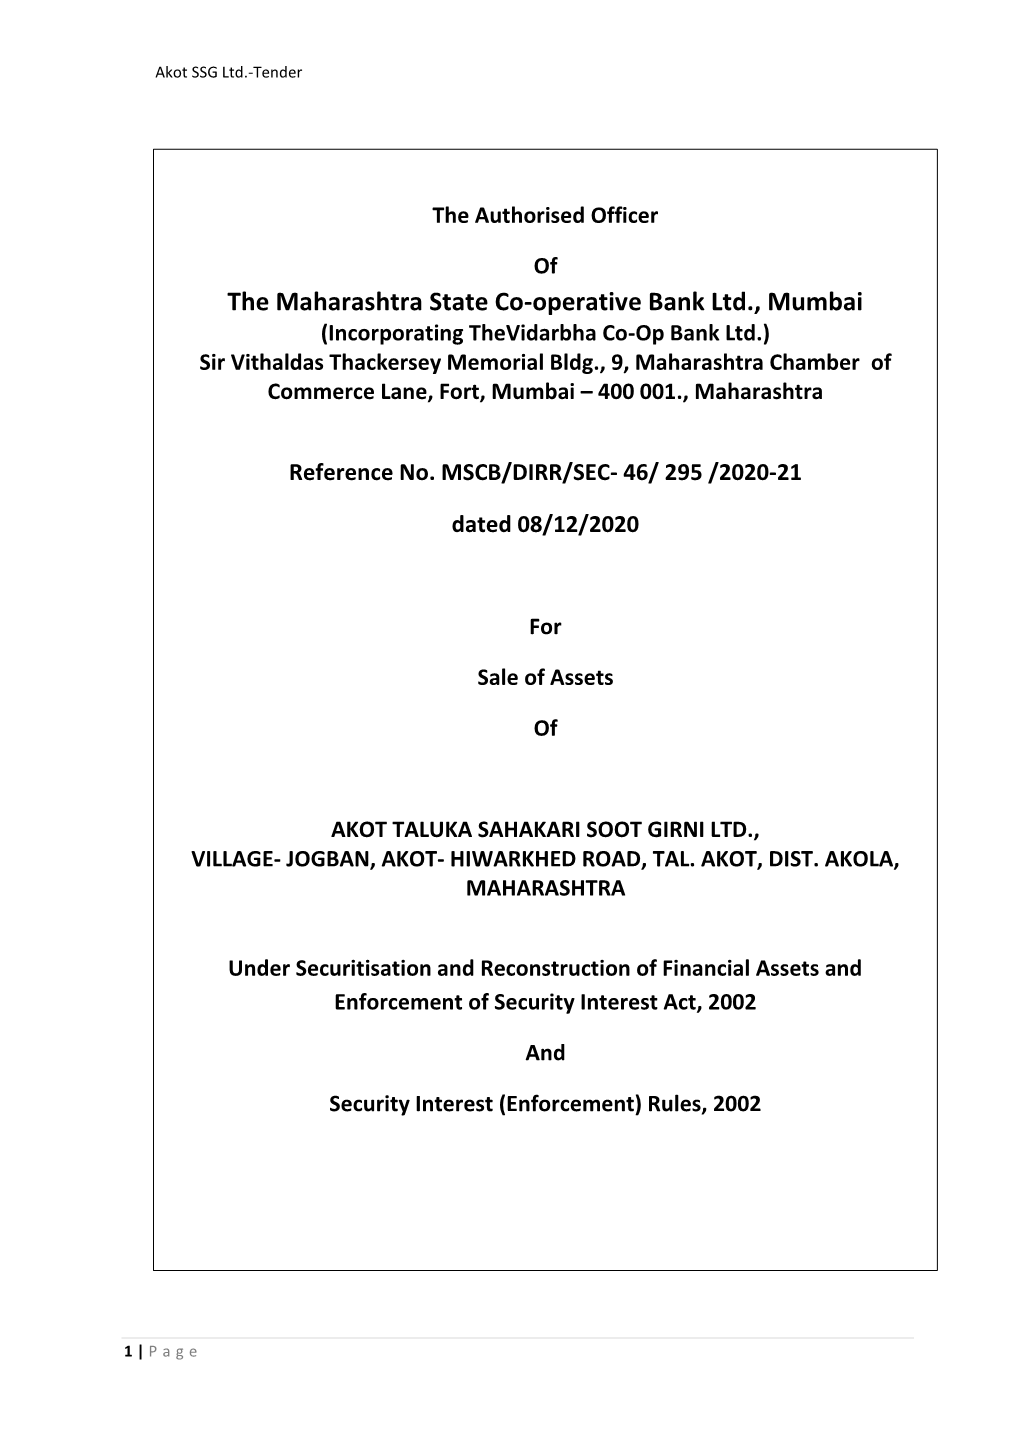 The Maharashtra State Co-Operative Bank Ltd., Mumbai